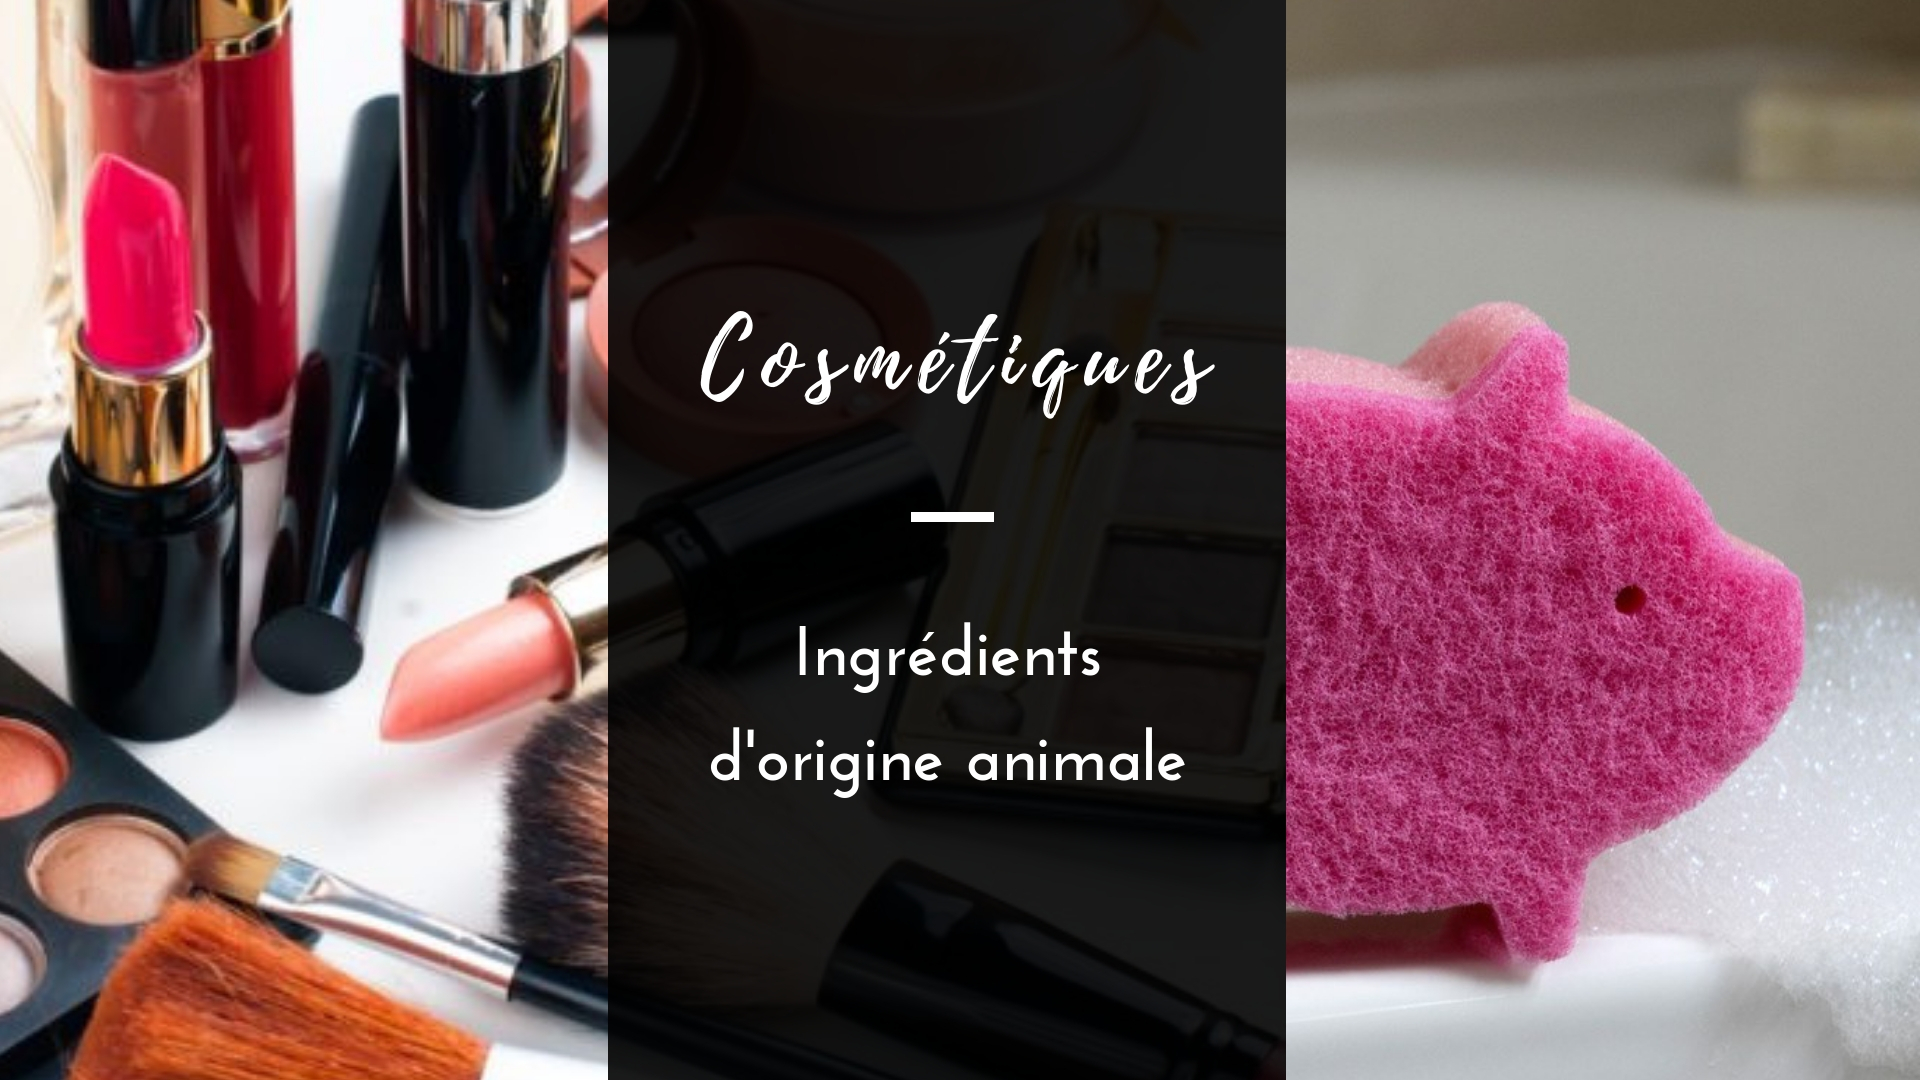 Cosmetiques ingredients dorigine animale atelierdestilleuls